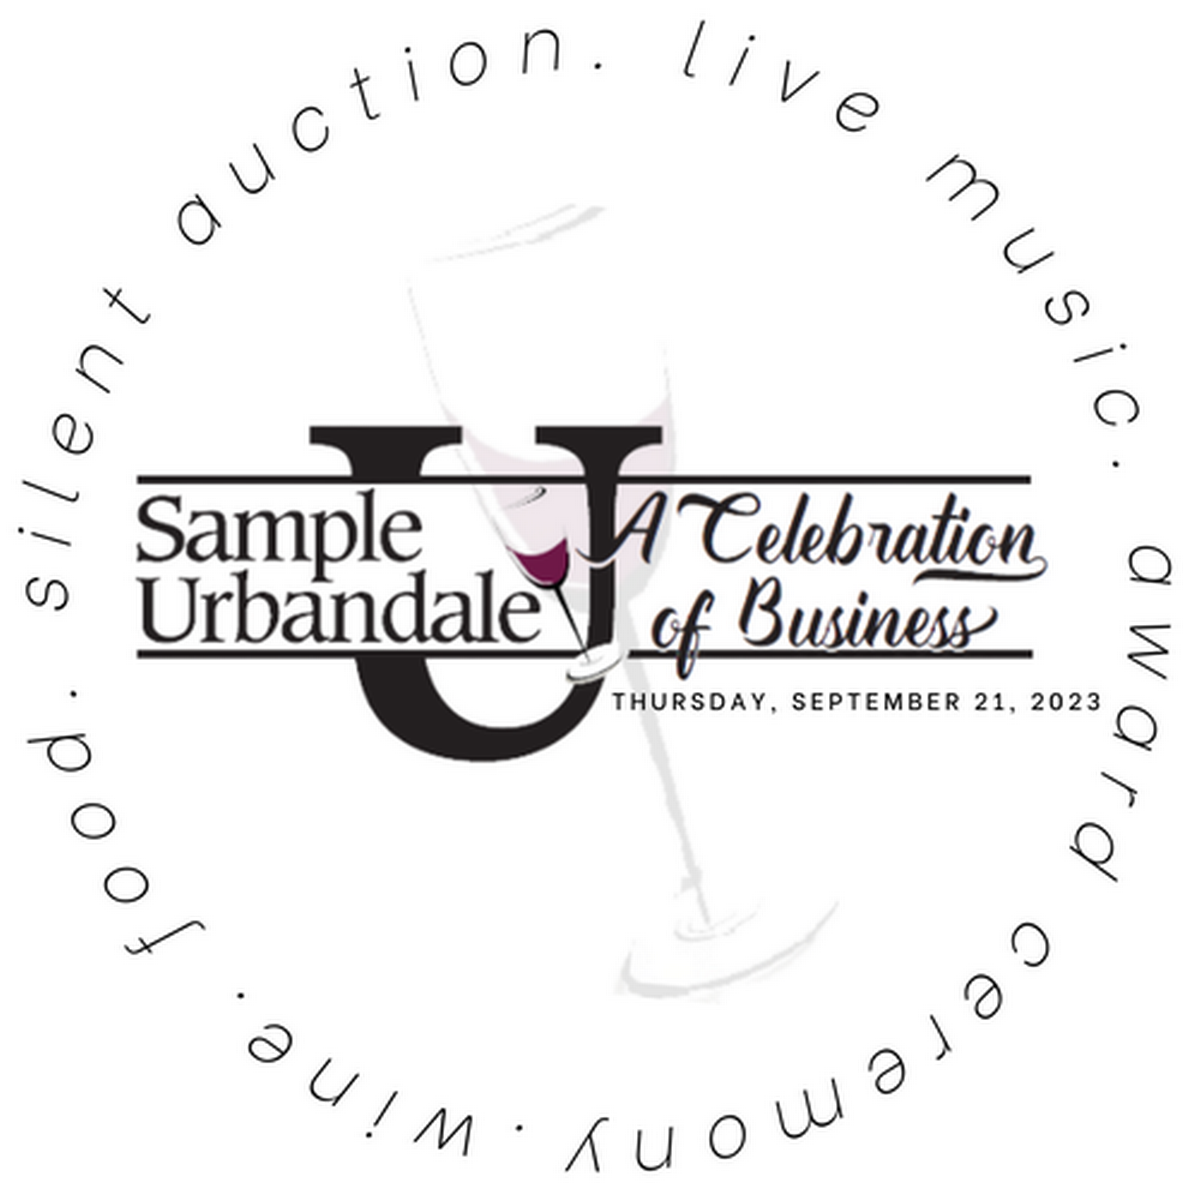 Sample Urbandale, A Celebration of Business Sep 21, 2023 Urbandale